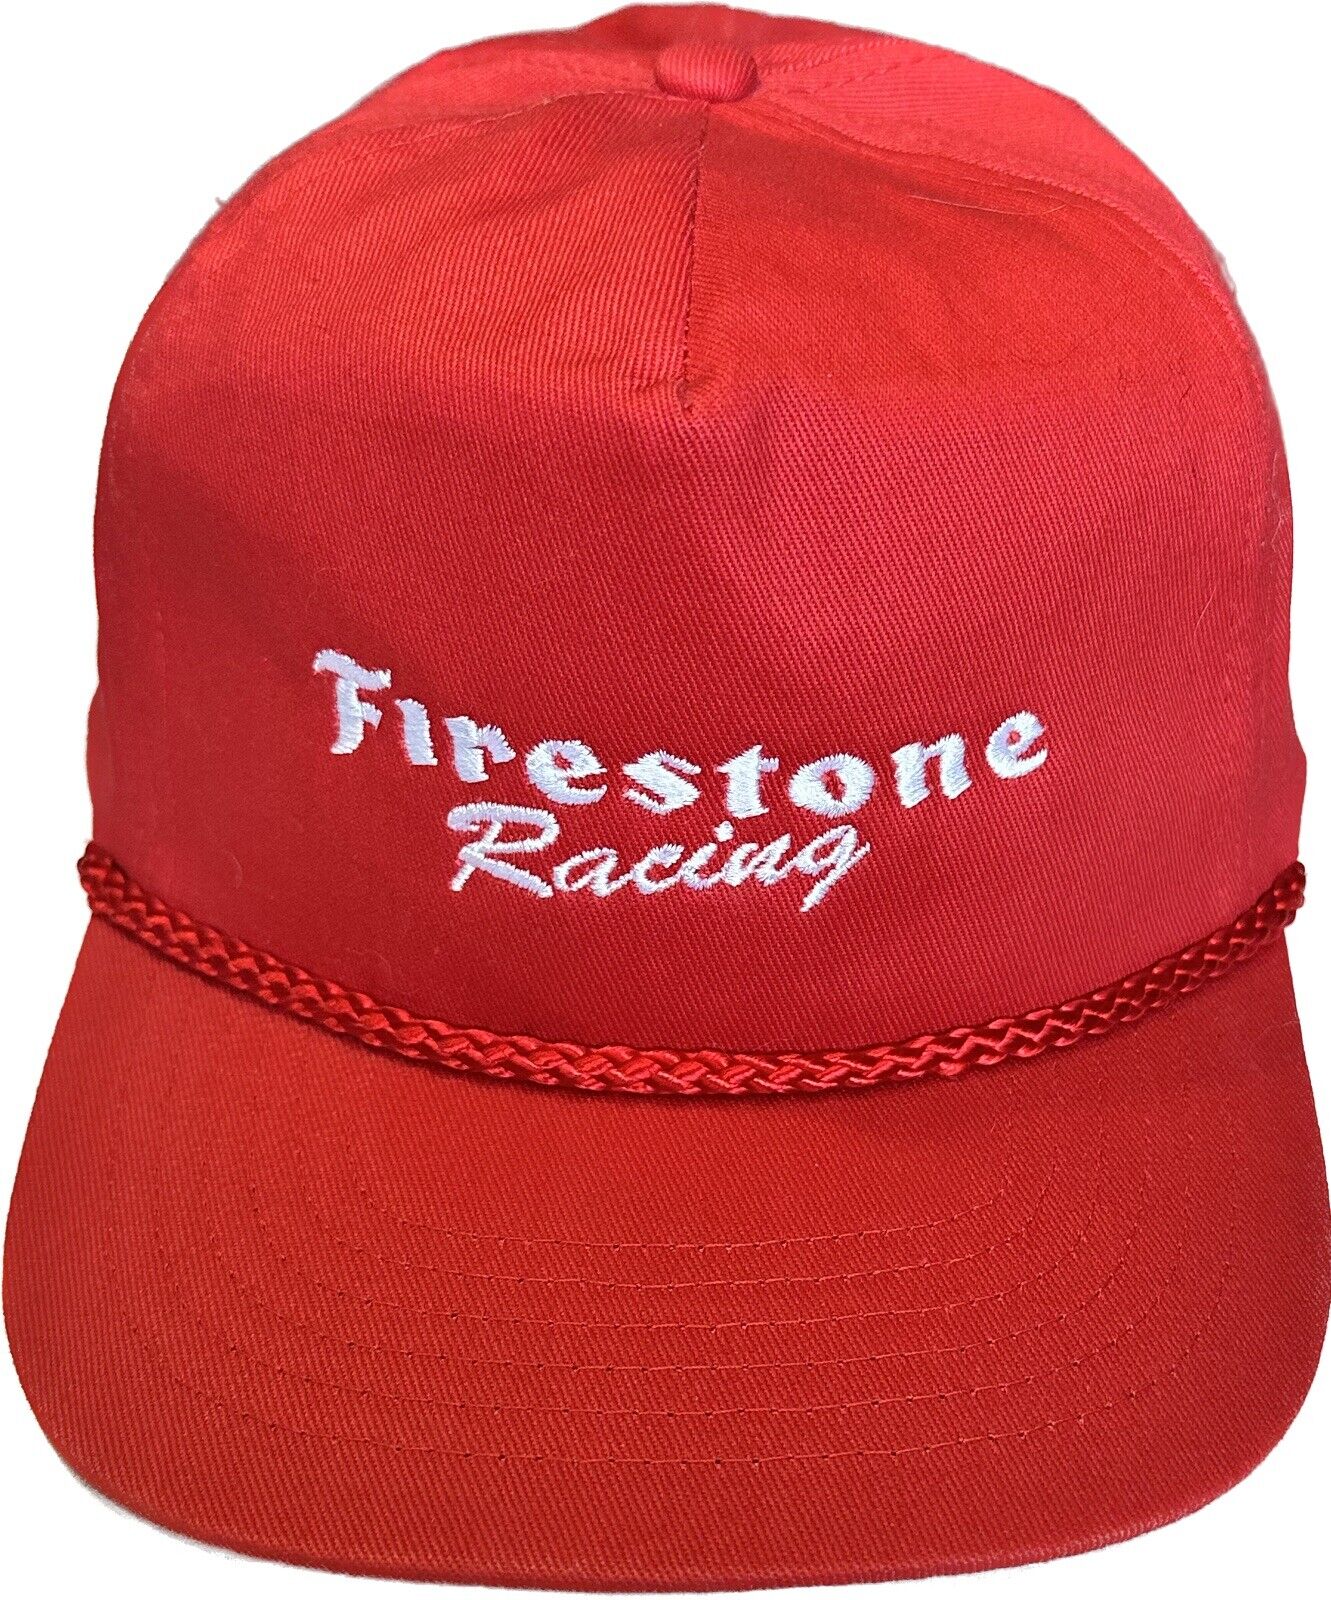 Firestone Racing: Captains Rope Hat Cap, Red, New 1980’s VTG, NWOT